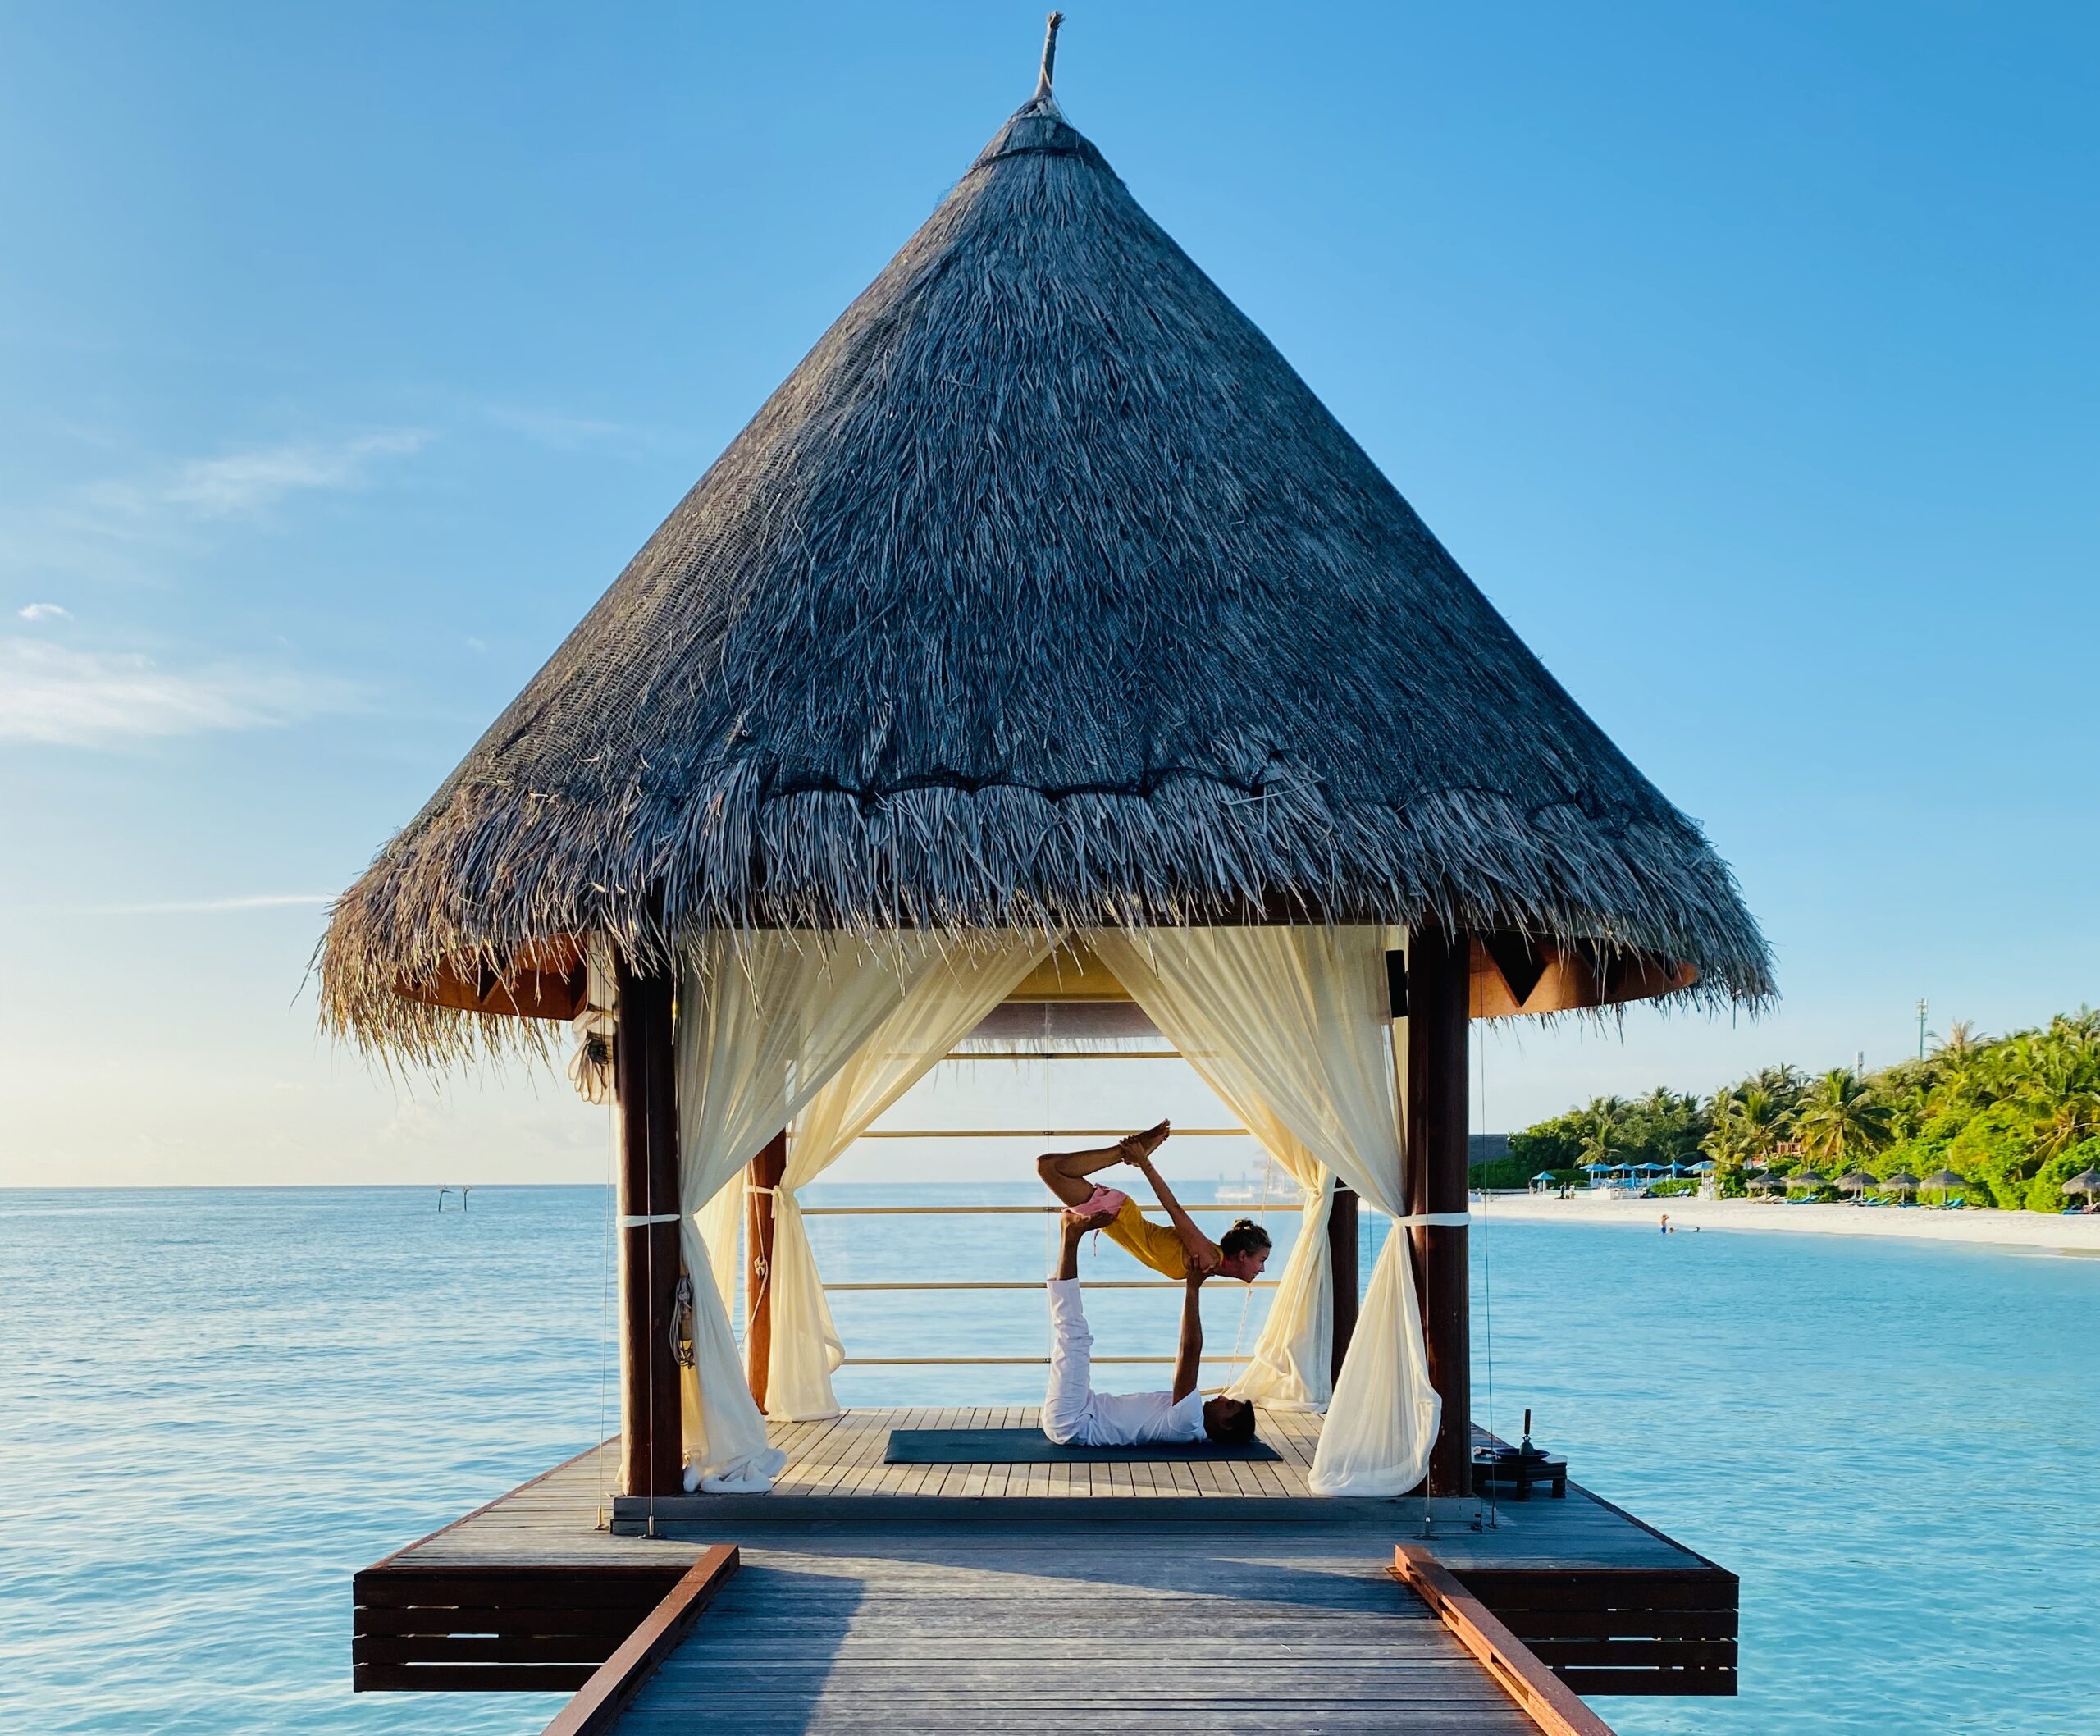 Sunset Acro-Yoga im Spa-Pavillon des Anantara Dhigu Maldives Resorts.